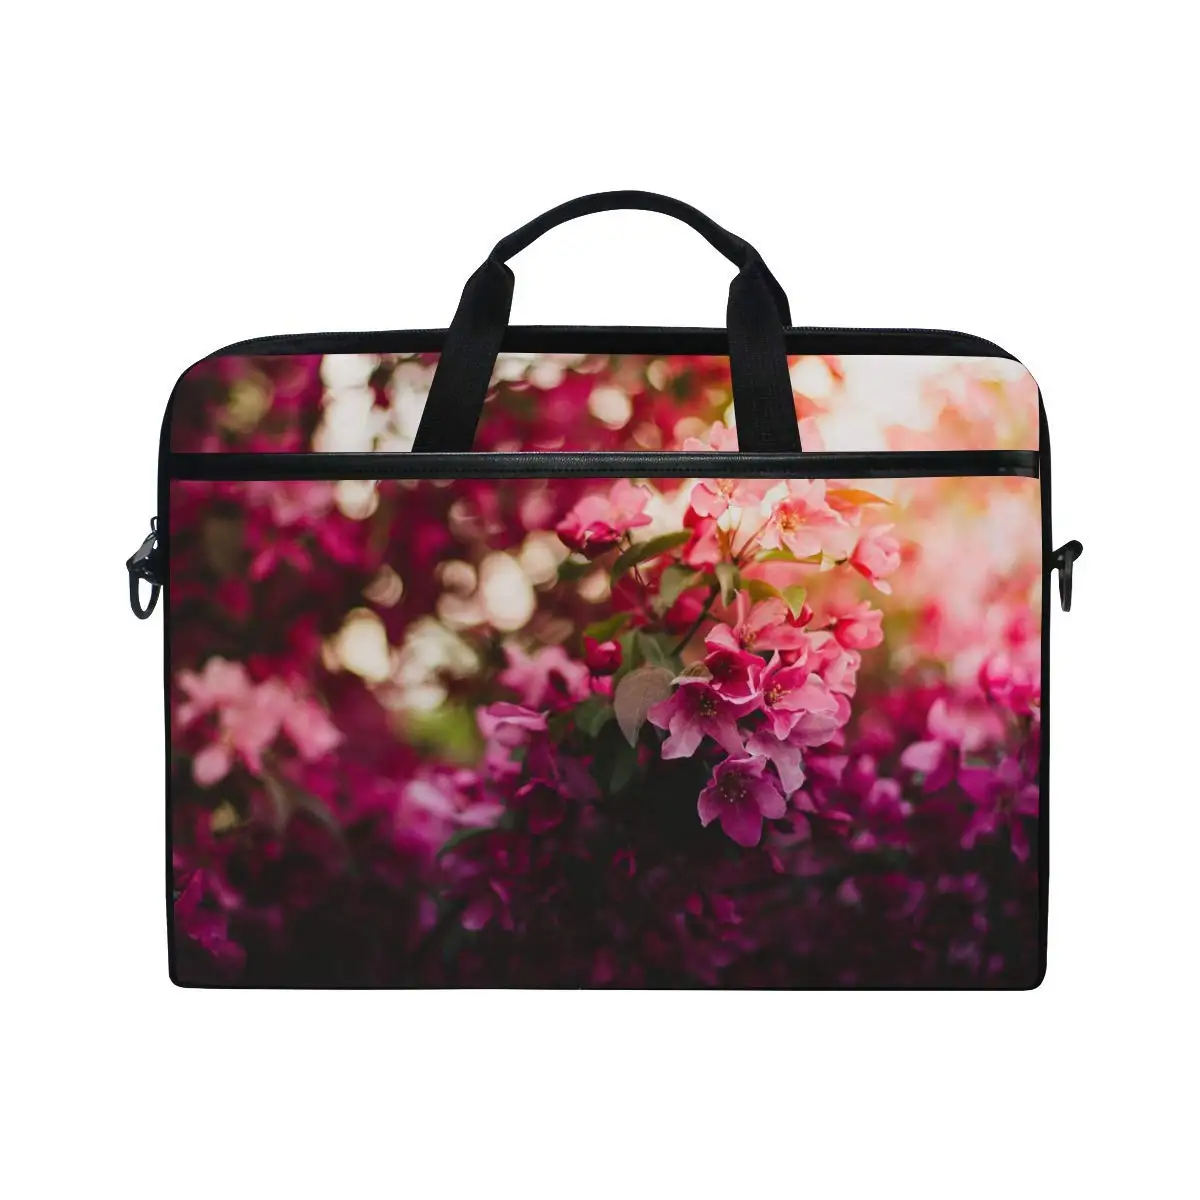 Cute Laptop Cases 15.6 for Women Laptop Shoulder Bag Carrying Briefcase Handbag Sleeve Case Cherry Blossom Sakura Pink